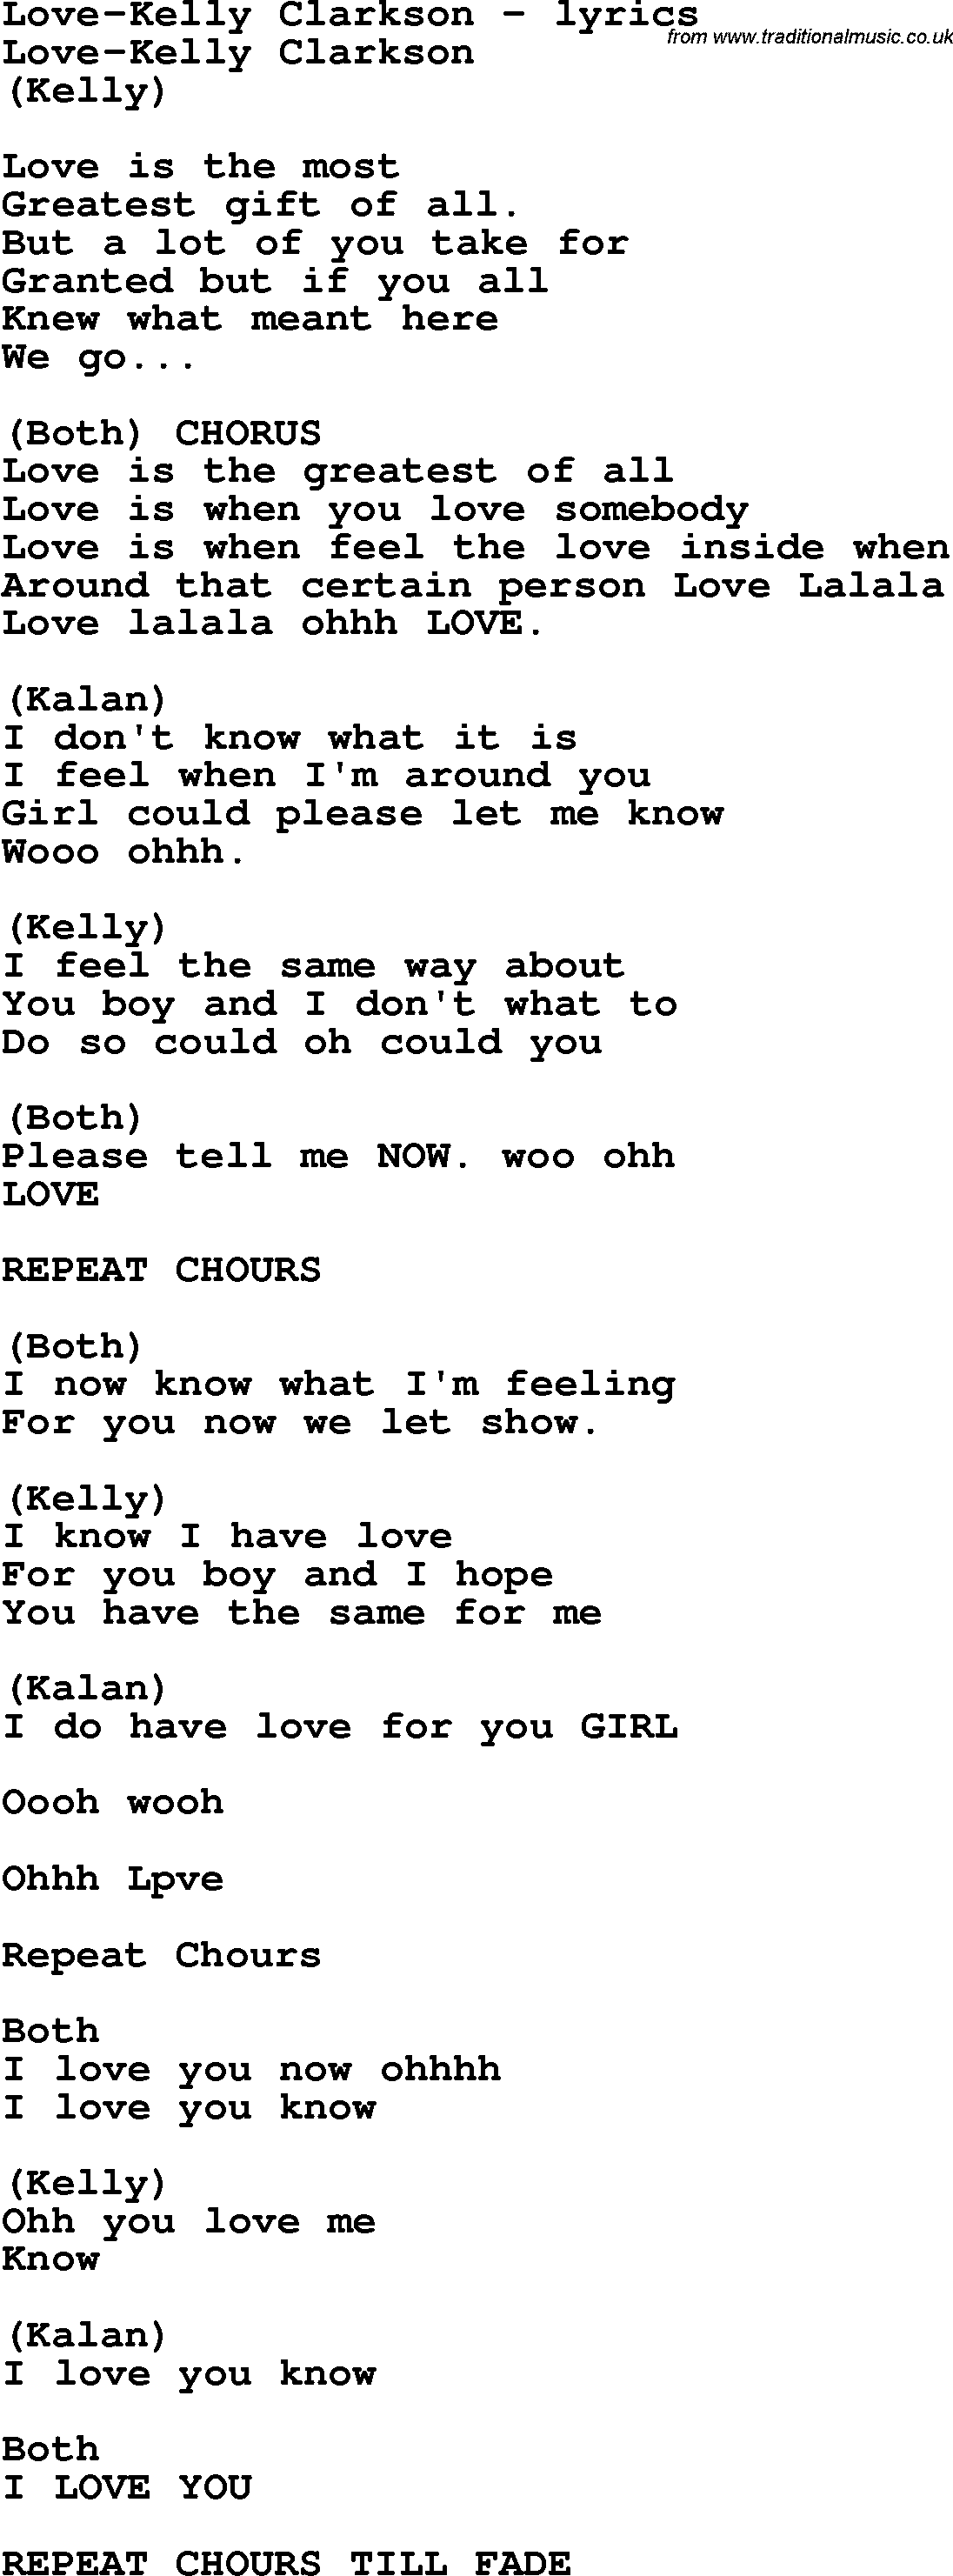 Love Song Lyrics for: Love-Kelly Clarkson